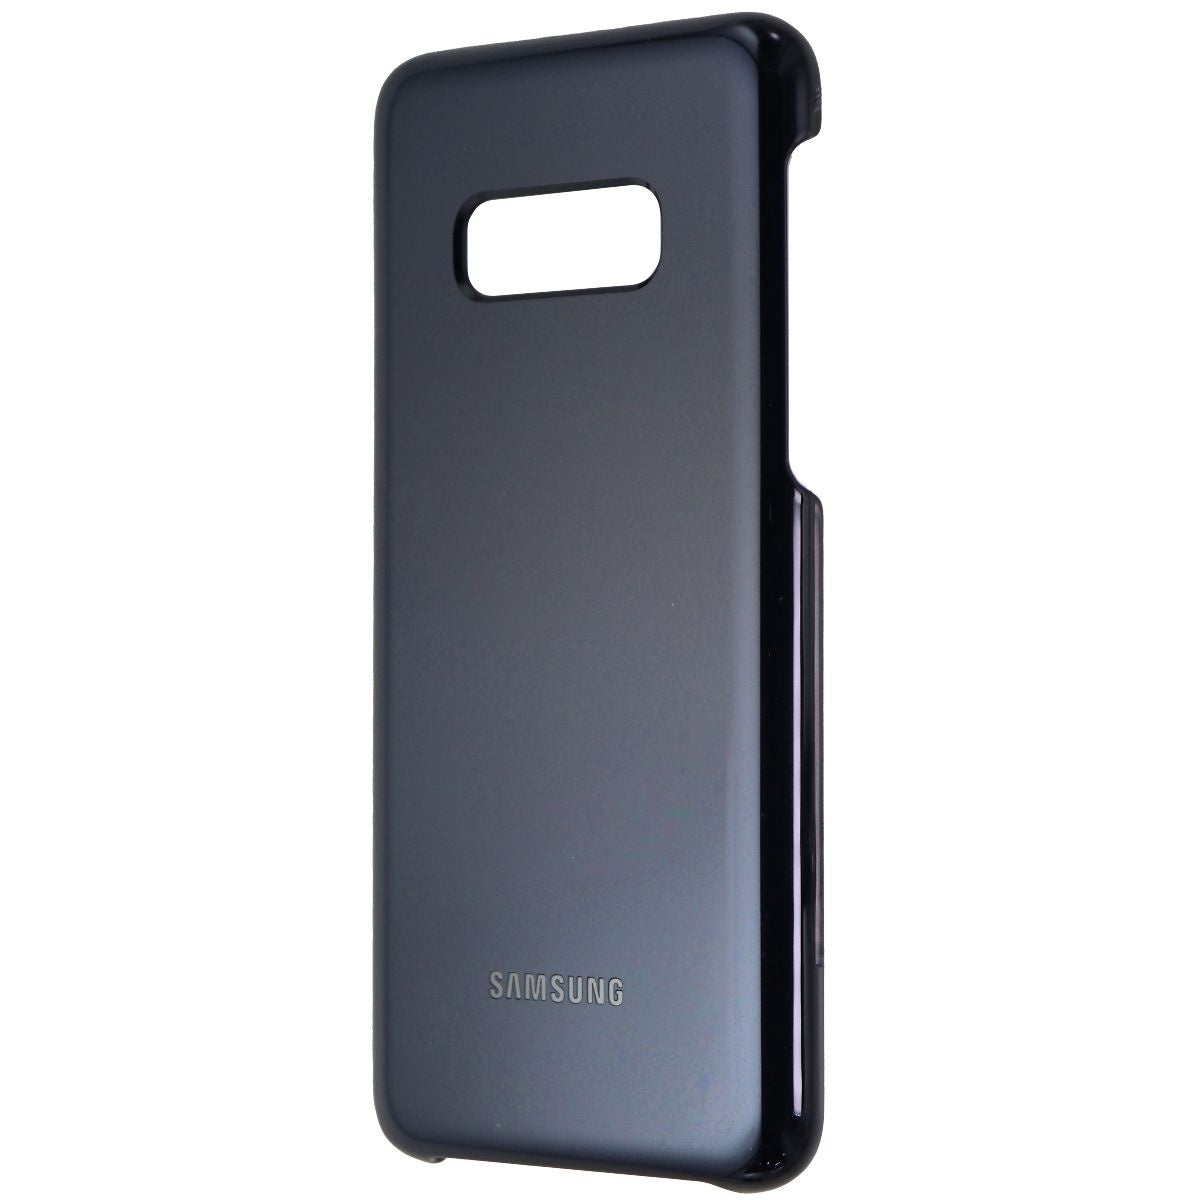 Samsung LED Back Cover Case For Samsung Galaxy S10e Smartphones - Black